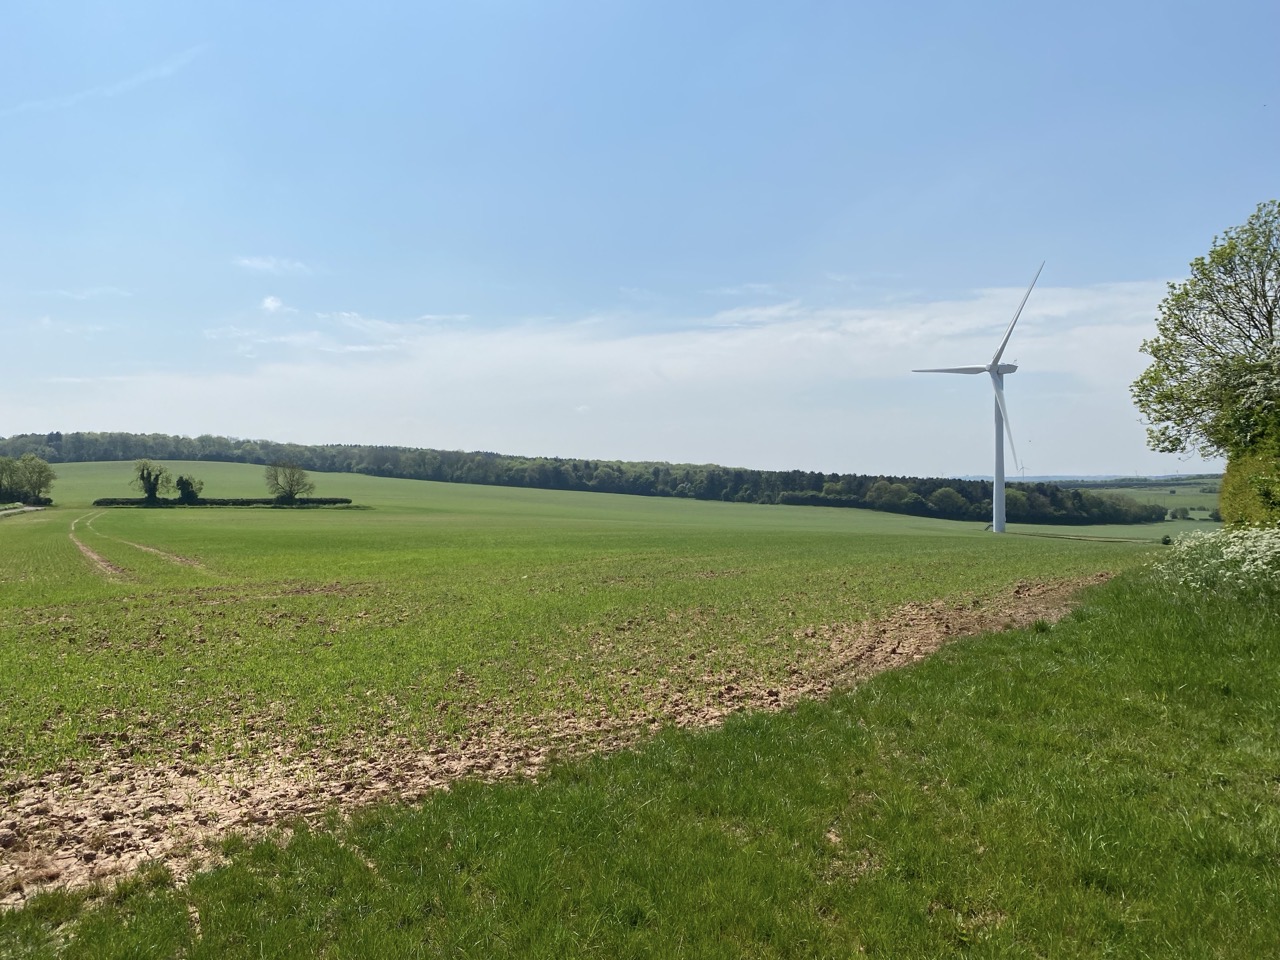 It’s a wind turbine in a big field